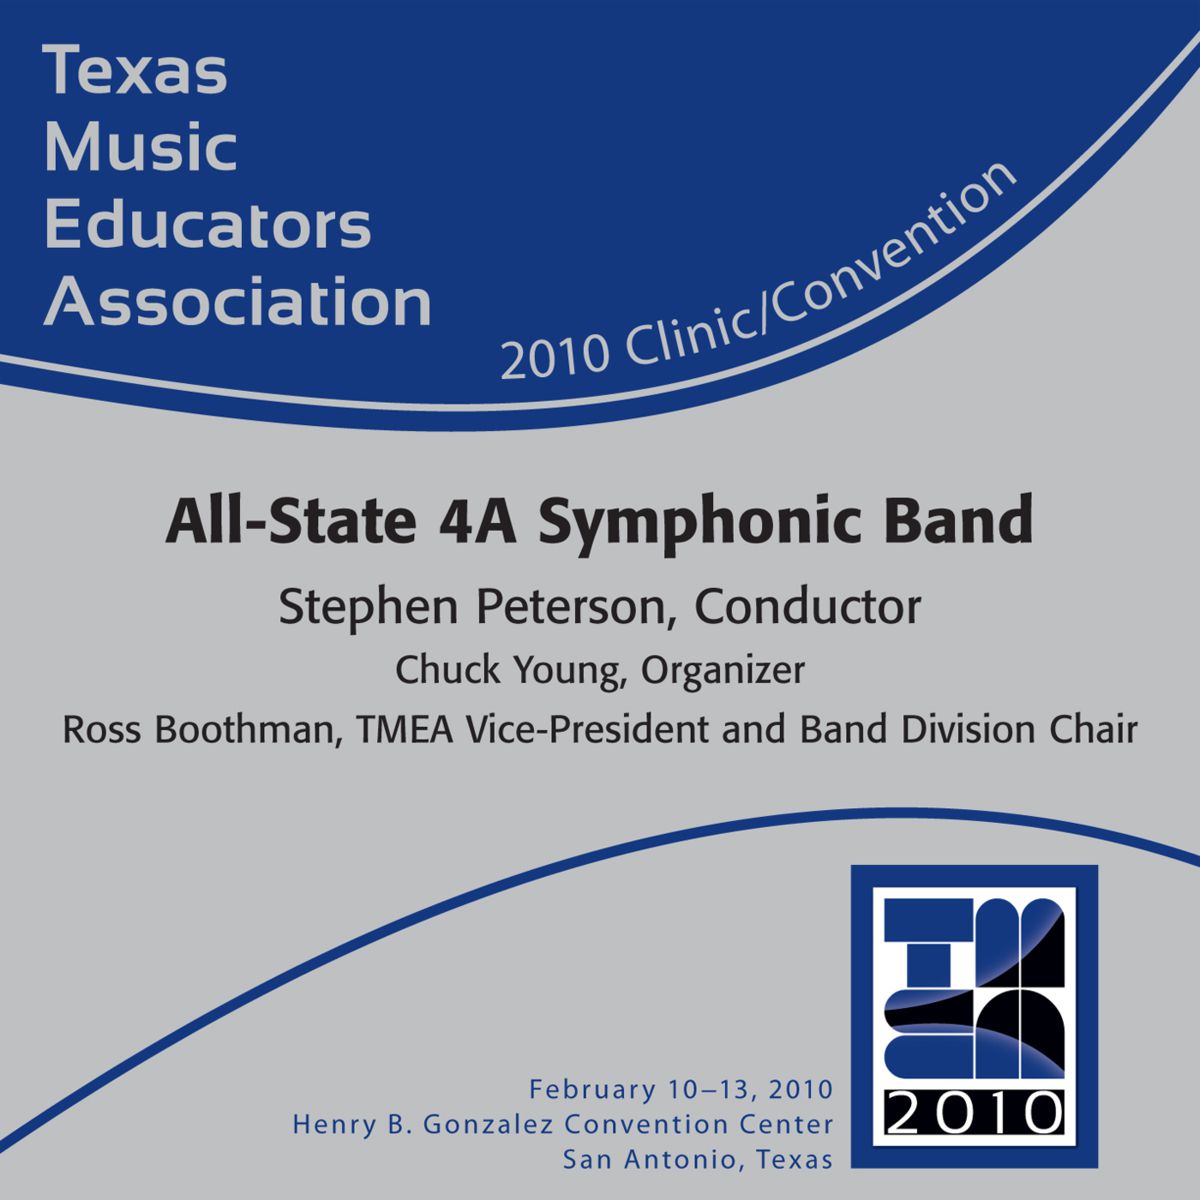 2010 Texas Music Educators Association: All-State 4A Symphonic Band - clicca qui